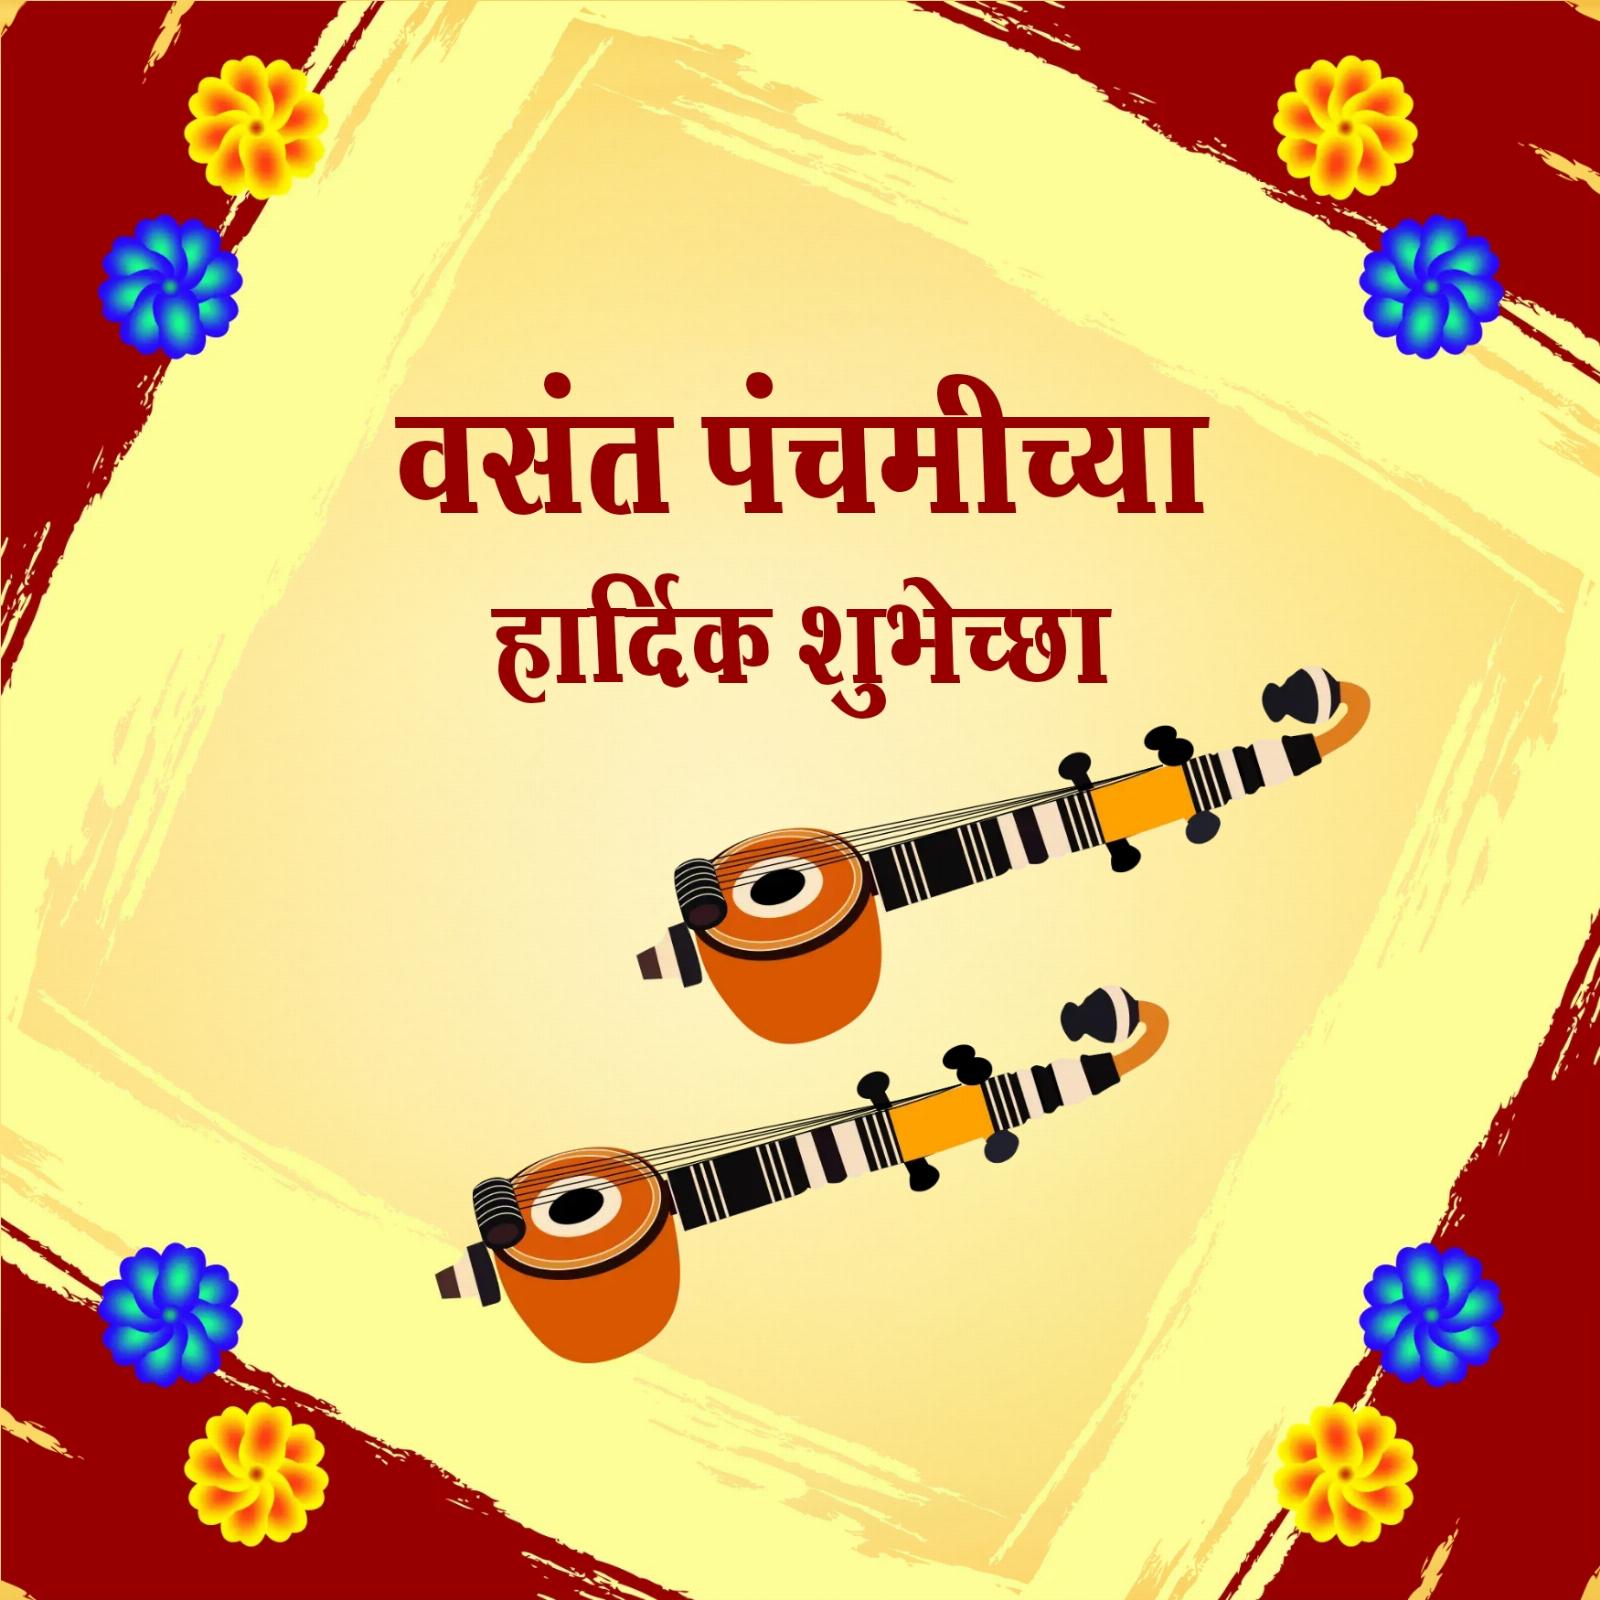 Happy Basant Panchami Images In Marathi